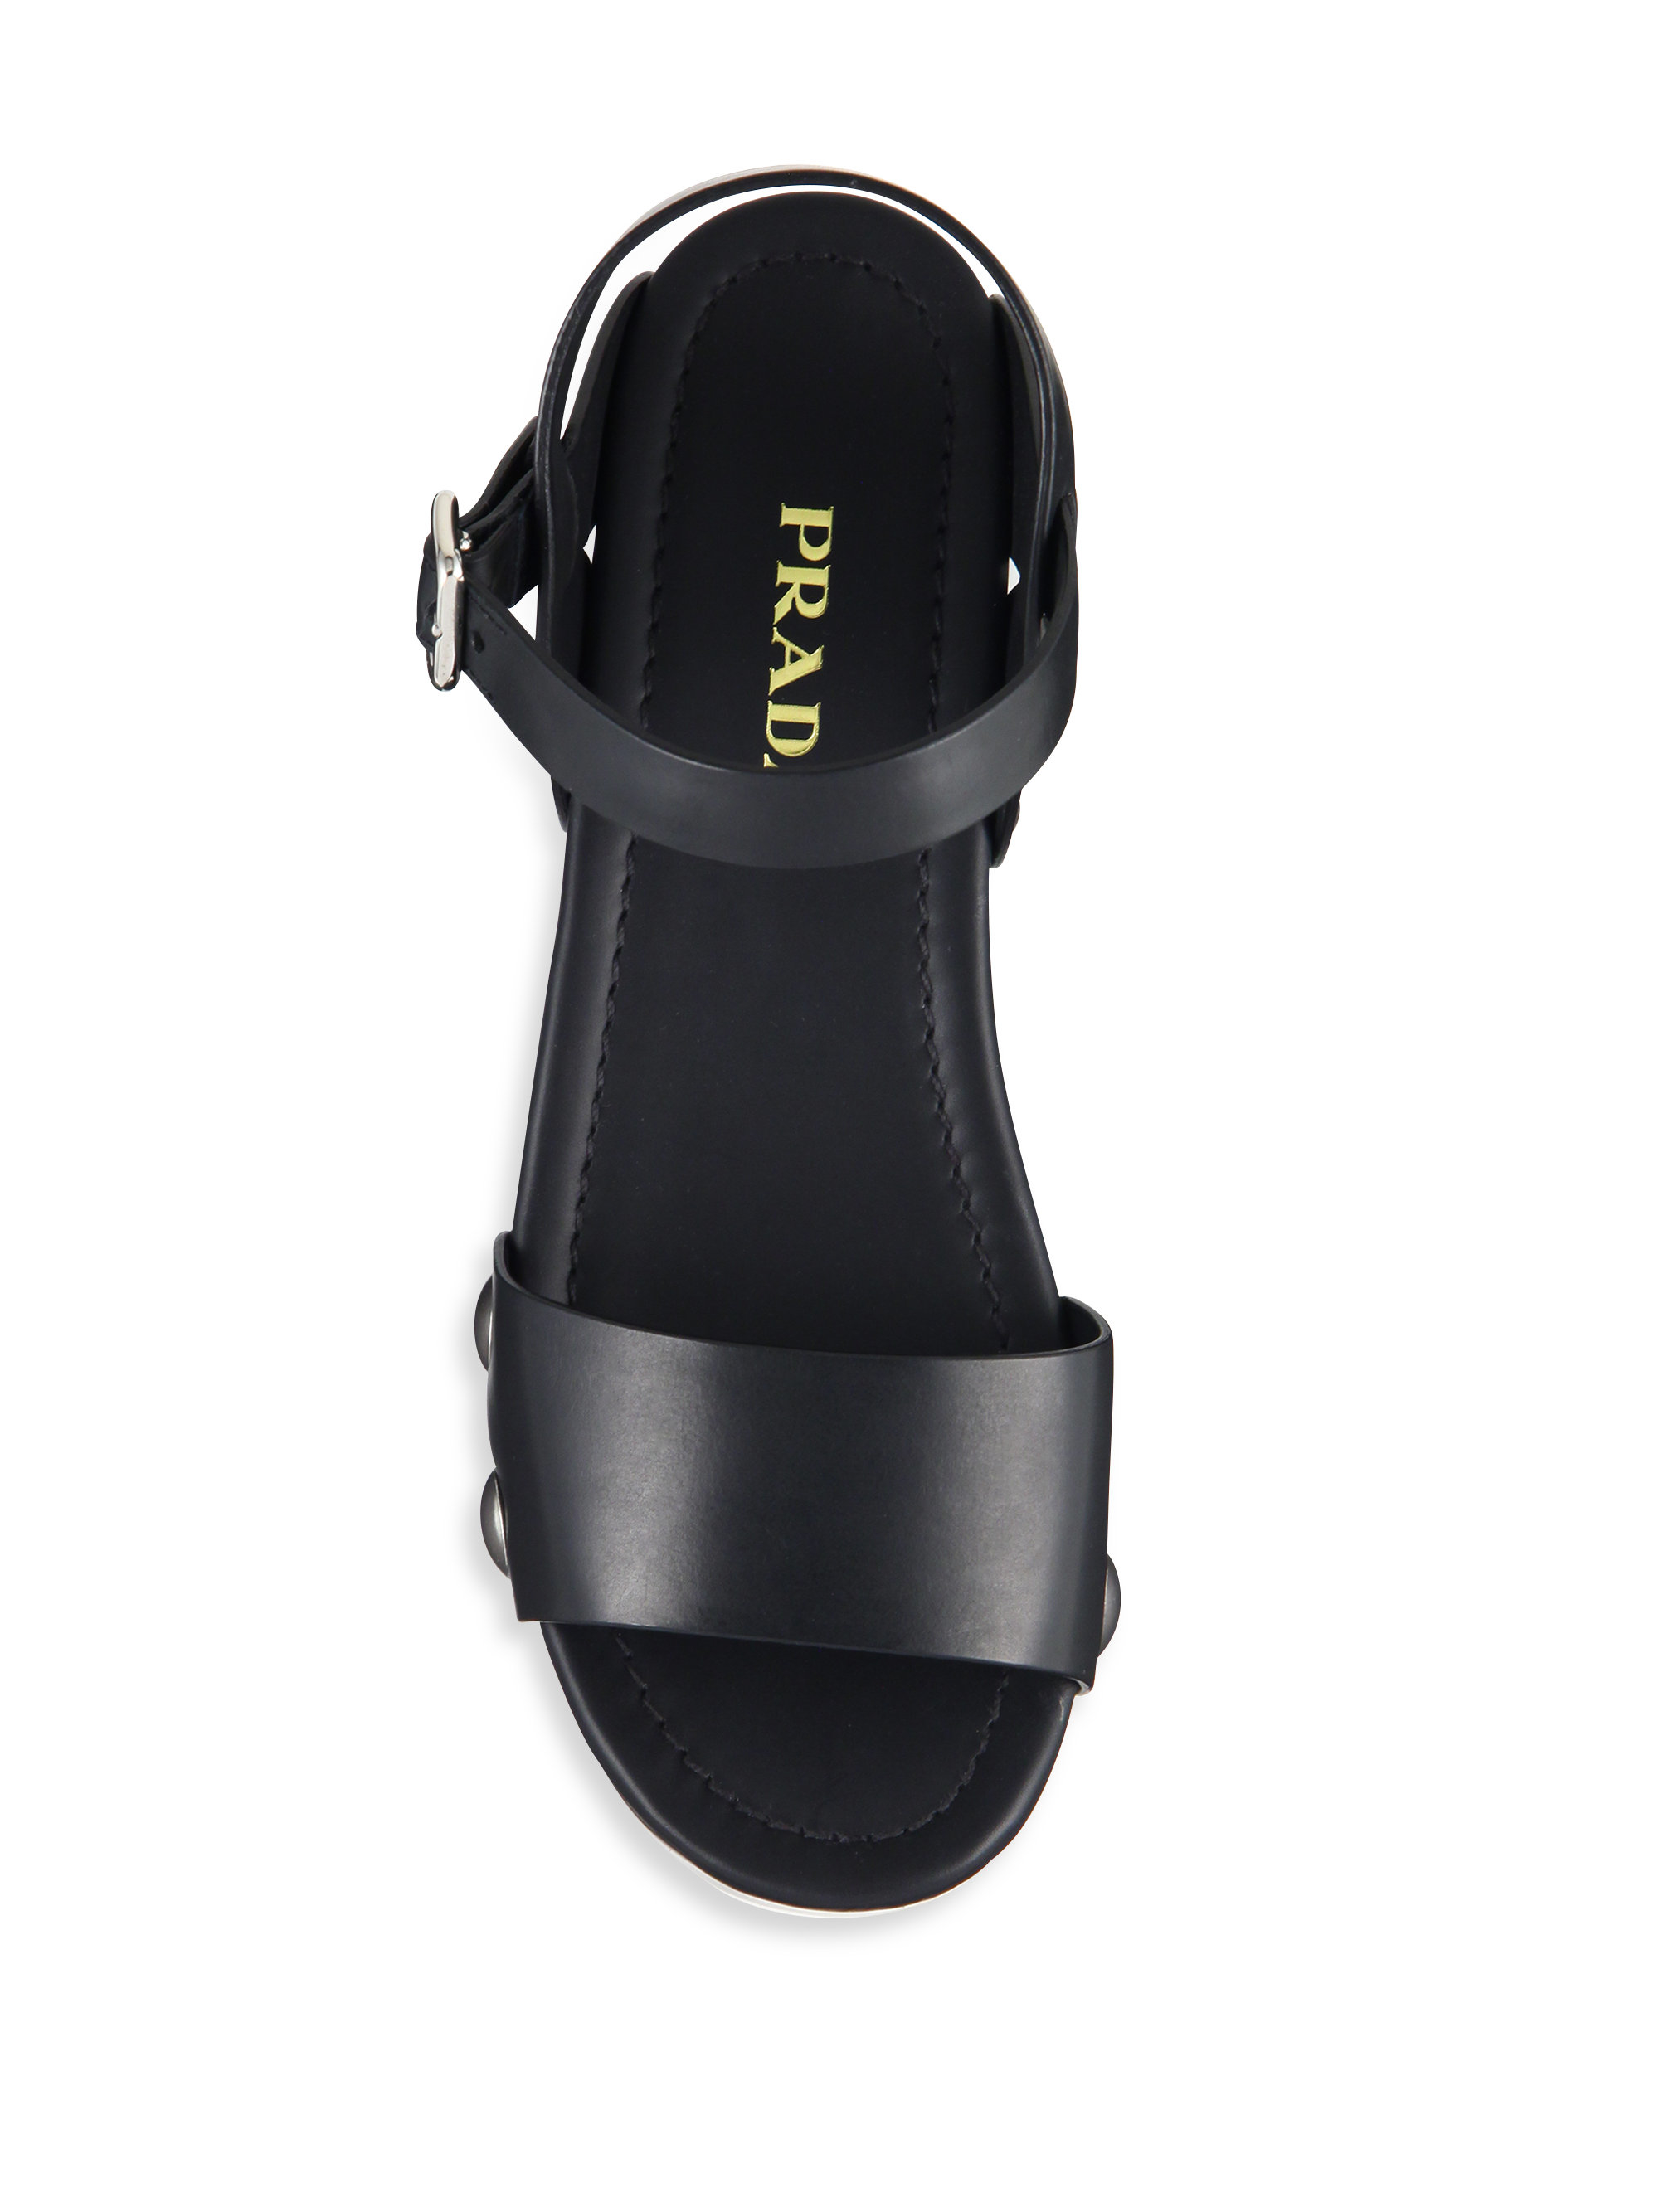 Prada Leather & Wooden Clog Sandals in Black | Lyst